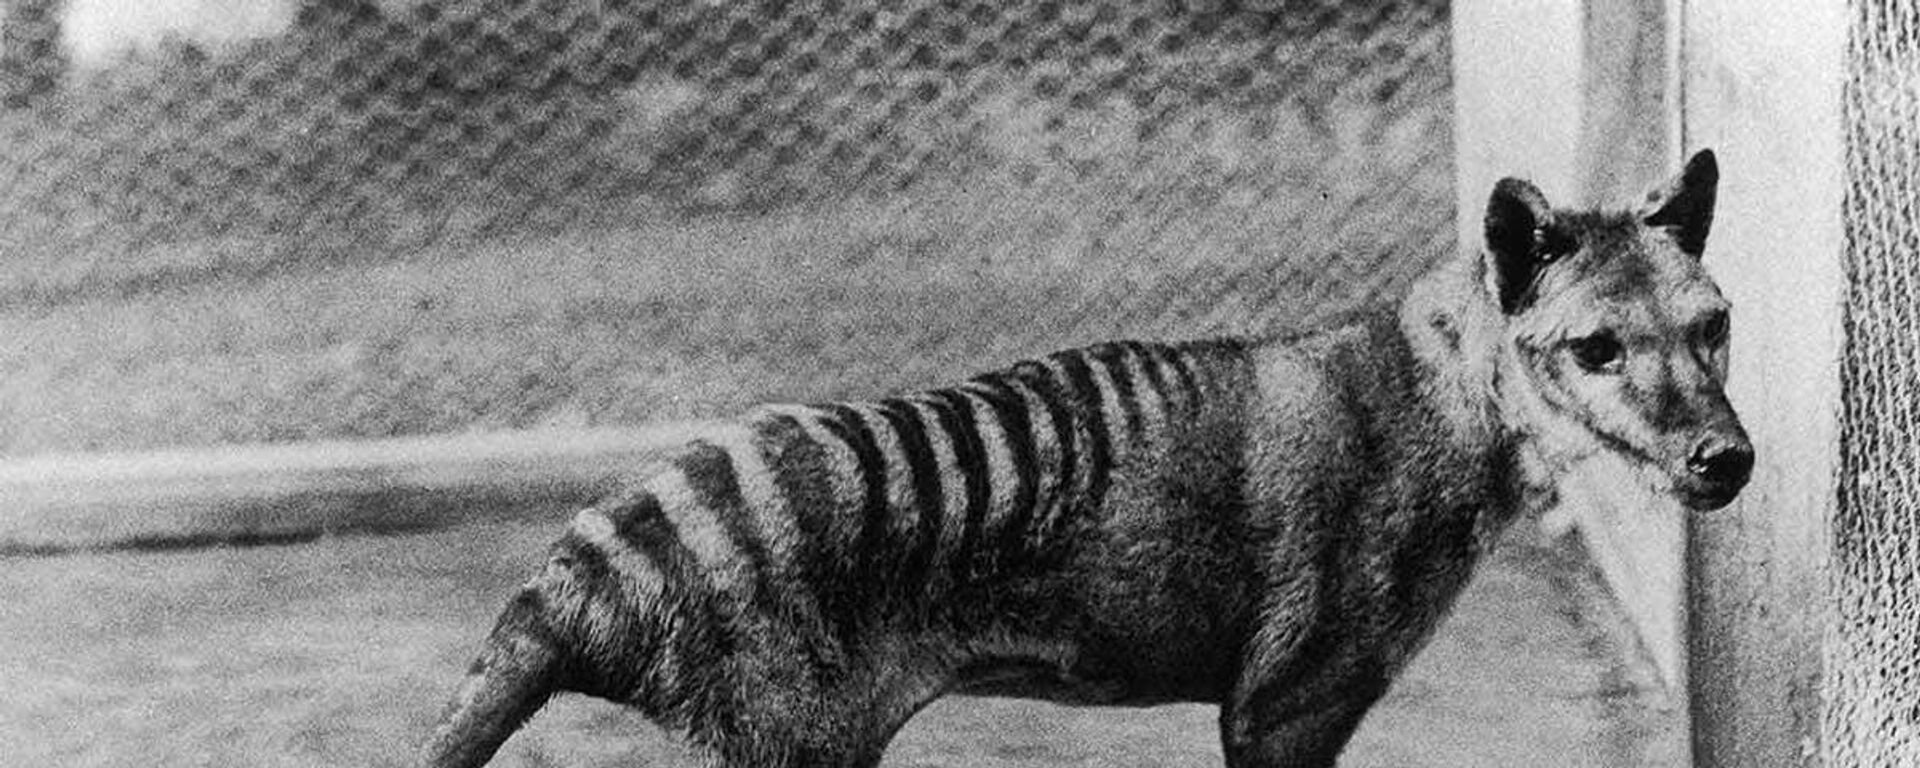 El Tigre de Tasmania se extinguió en 1936. - Sputnik Mundo, 1920, 17.08.2022